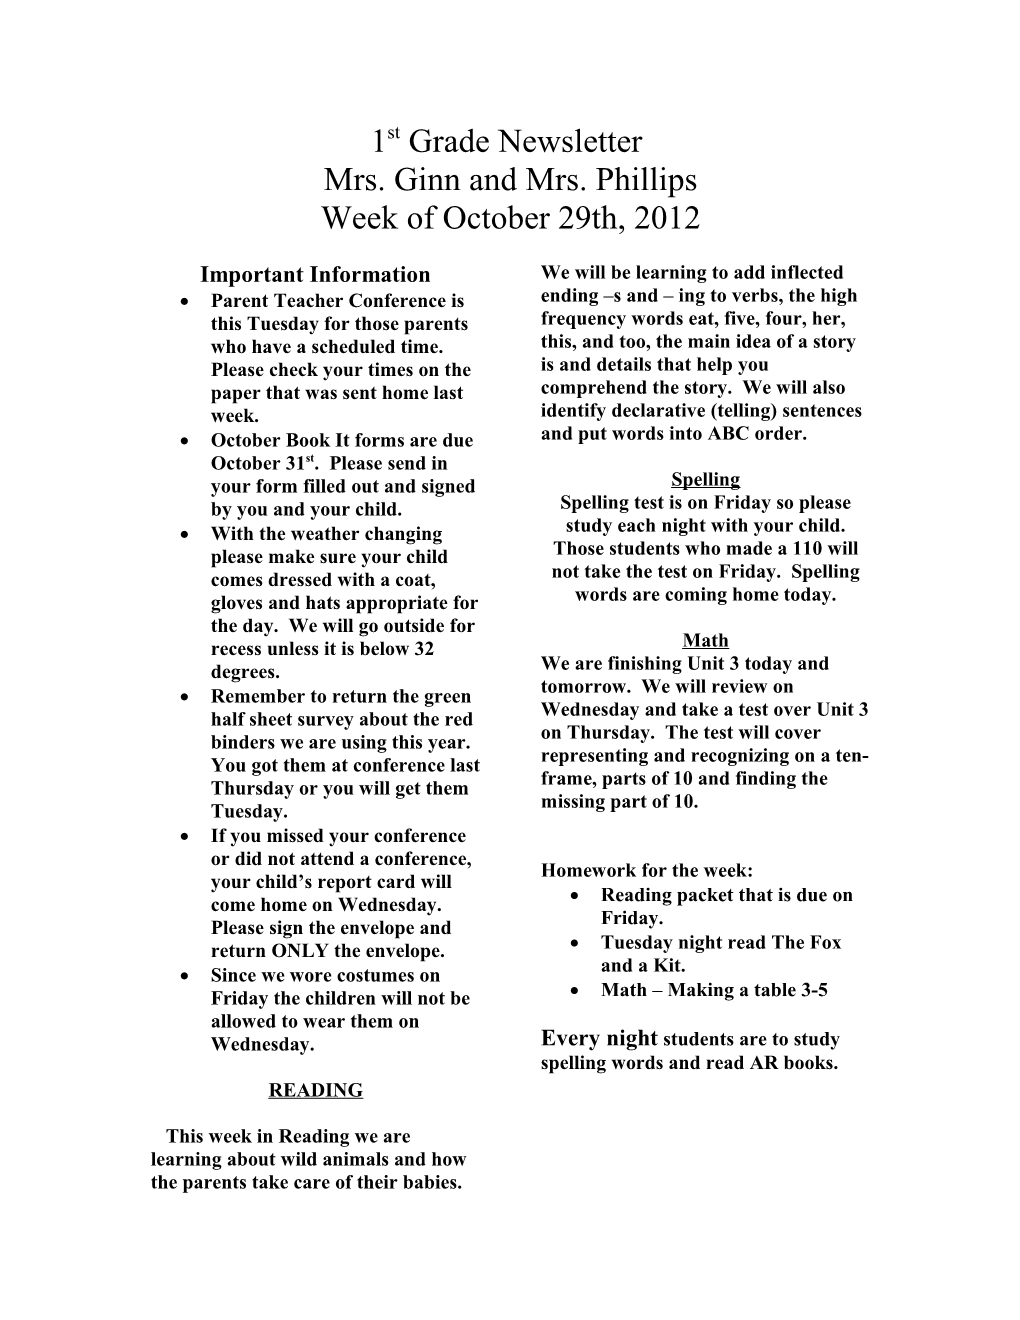 Mrs. Ginn and Mrs. Phillips